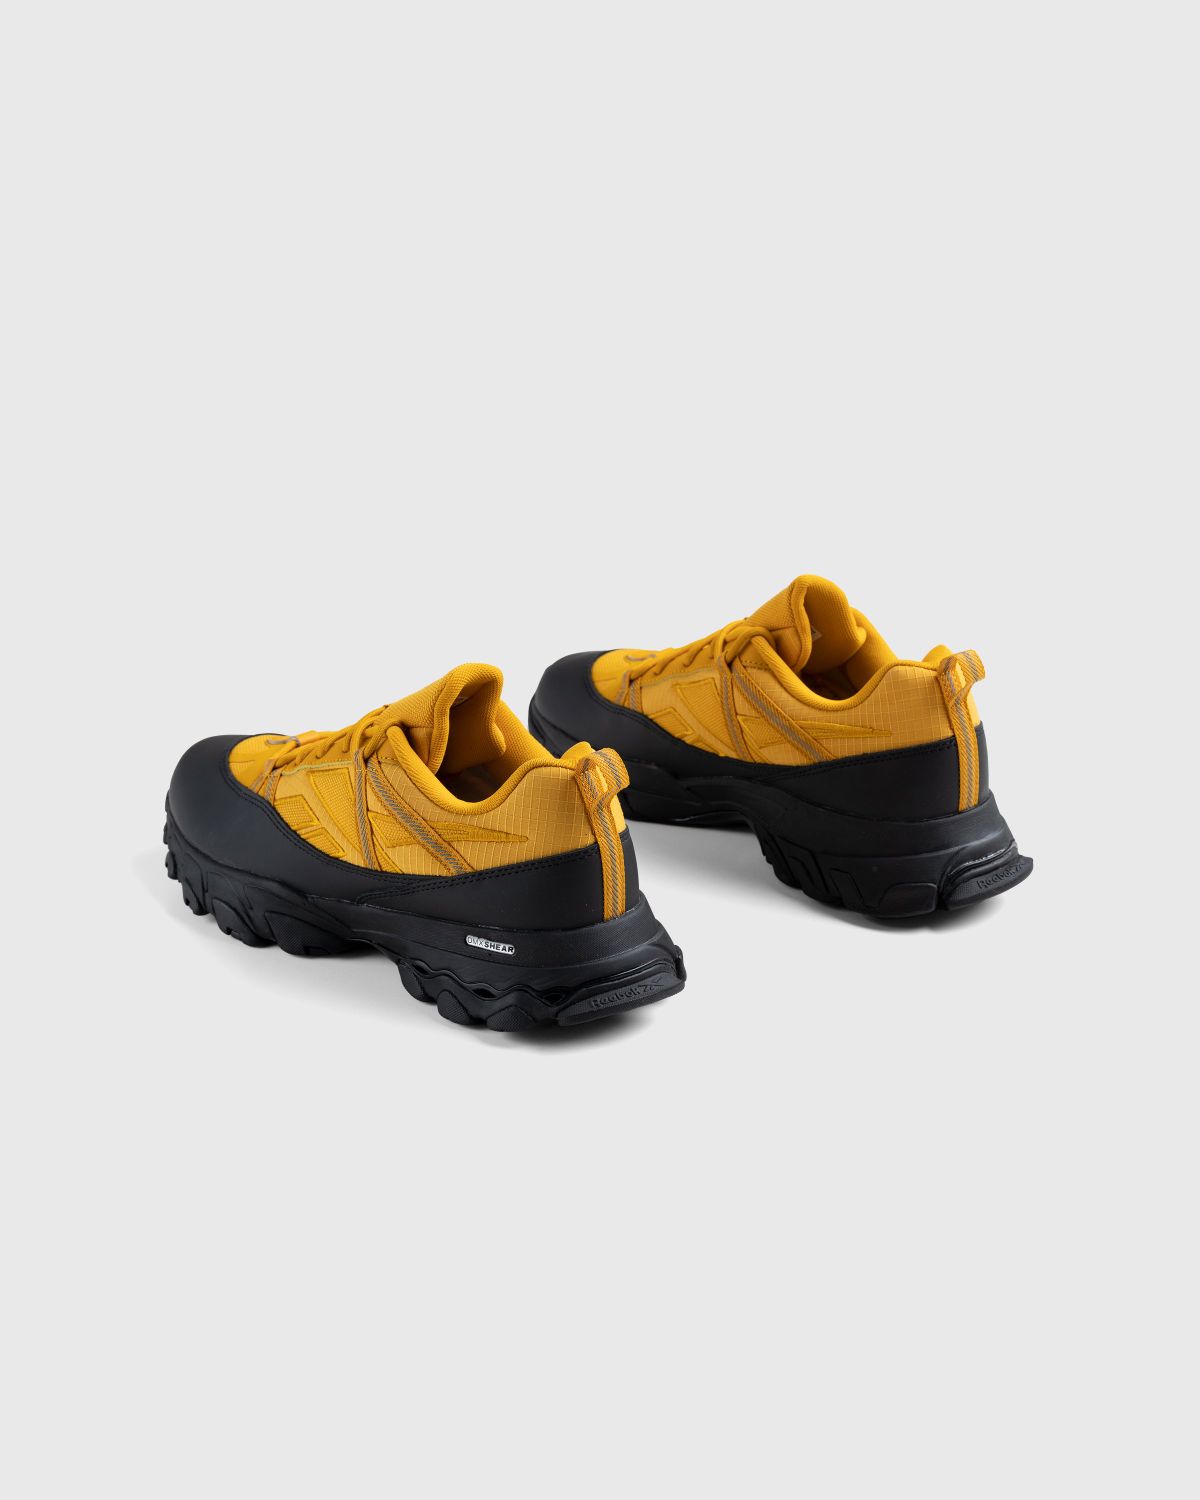 Reebok – DMX Trail Shadow Yellow - Low Top Sneakers - Yellow - Image 3